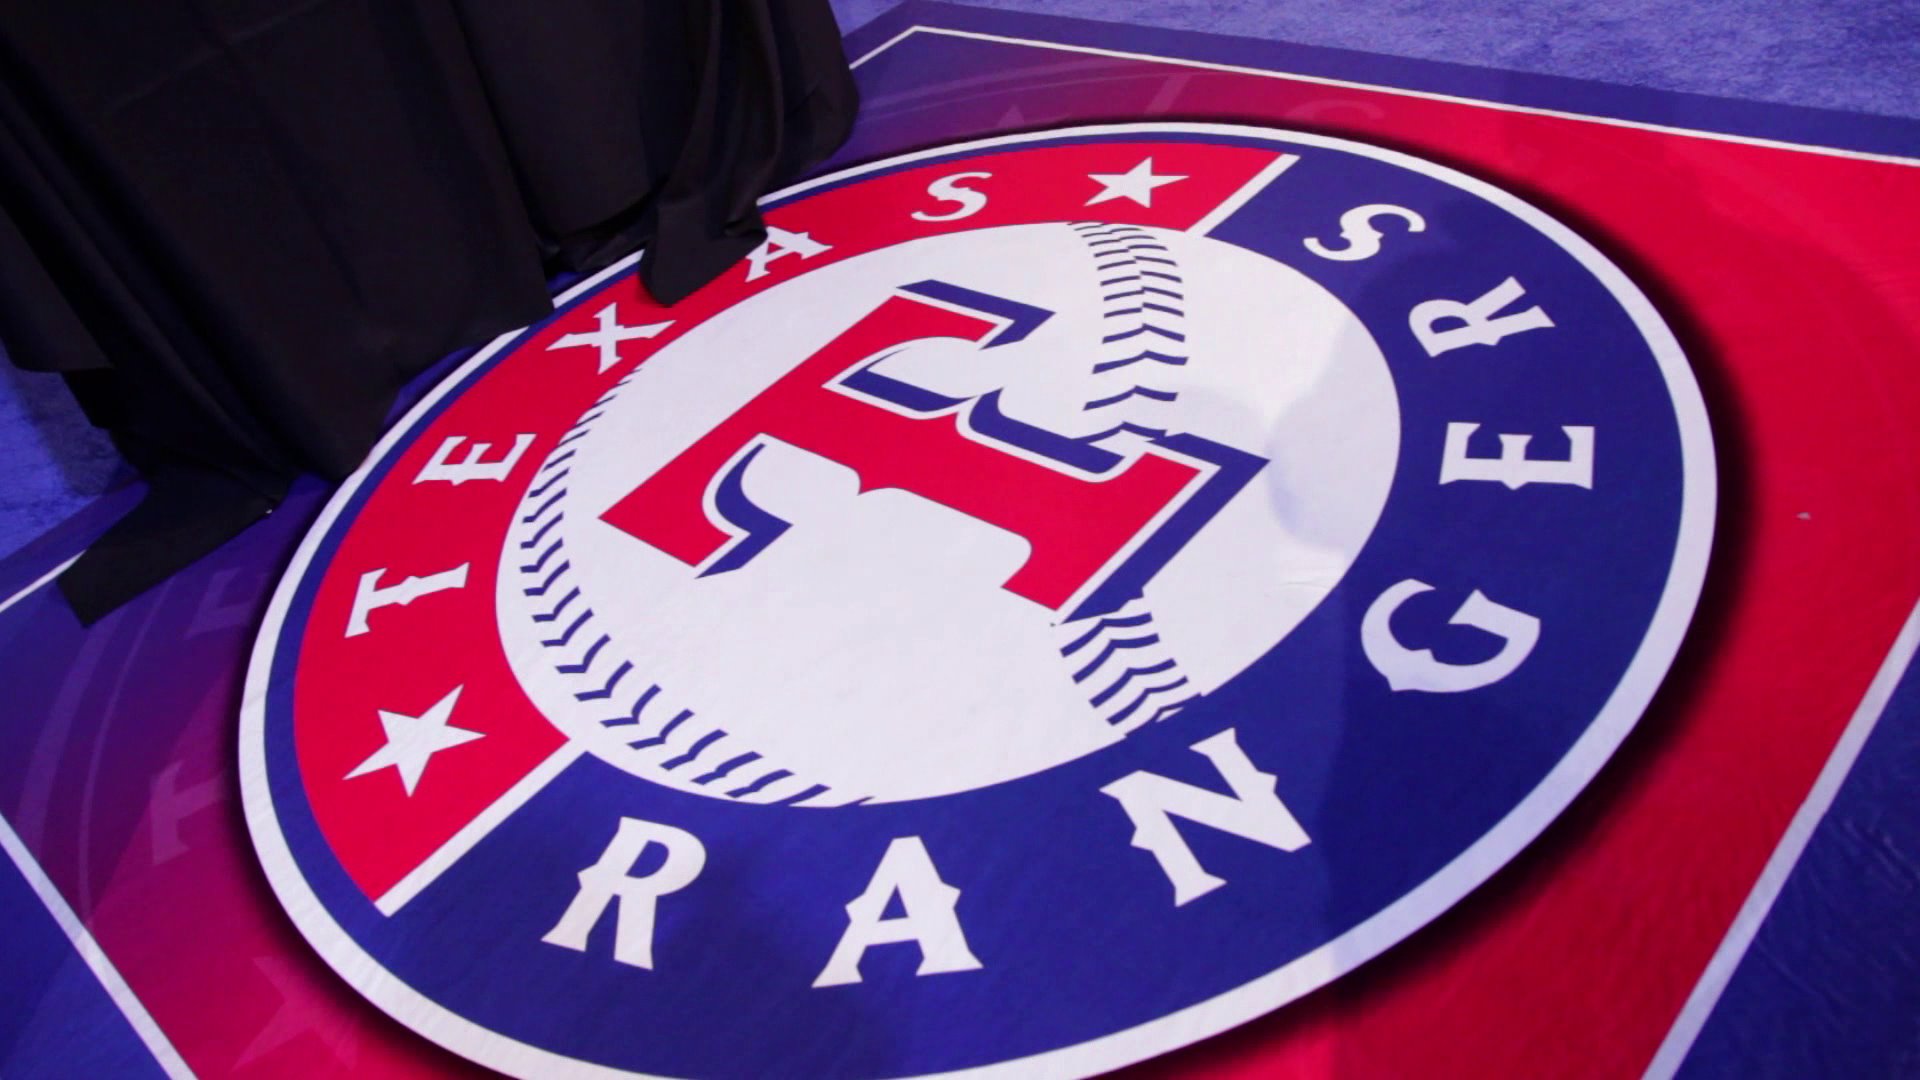 HD Wallpaper featuring the Texas Rangers logo as a vibrant desktop background.